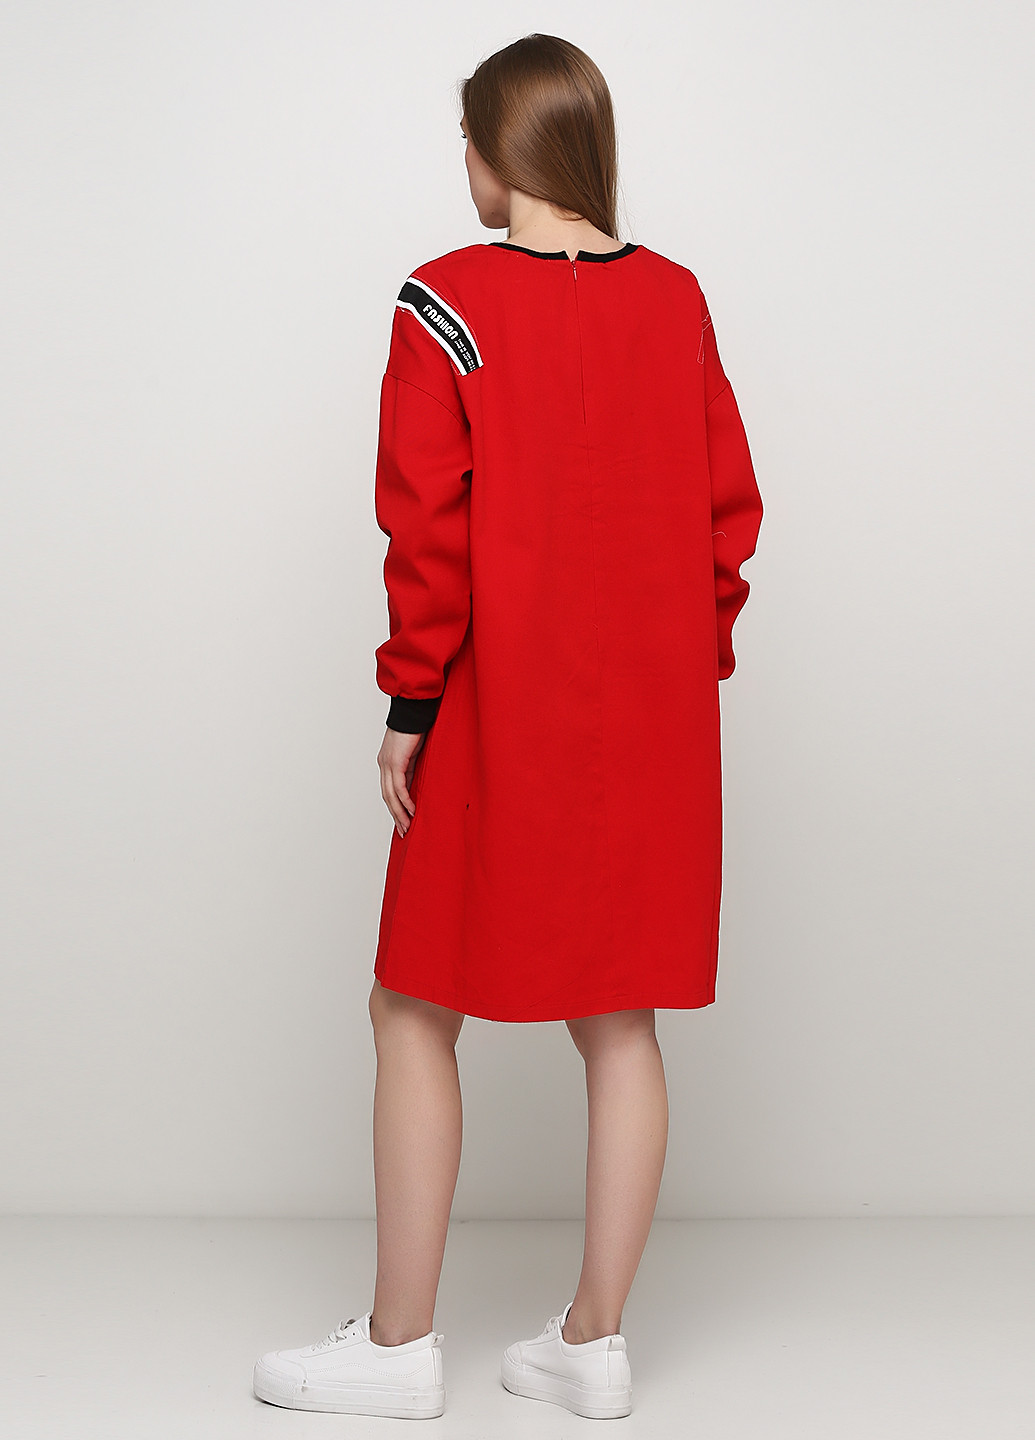 Красное кэжуал платье оверсайз Made in Italy с надписью